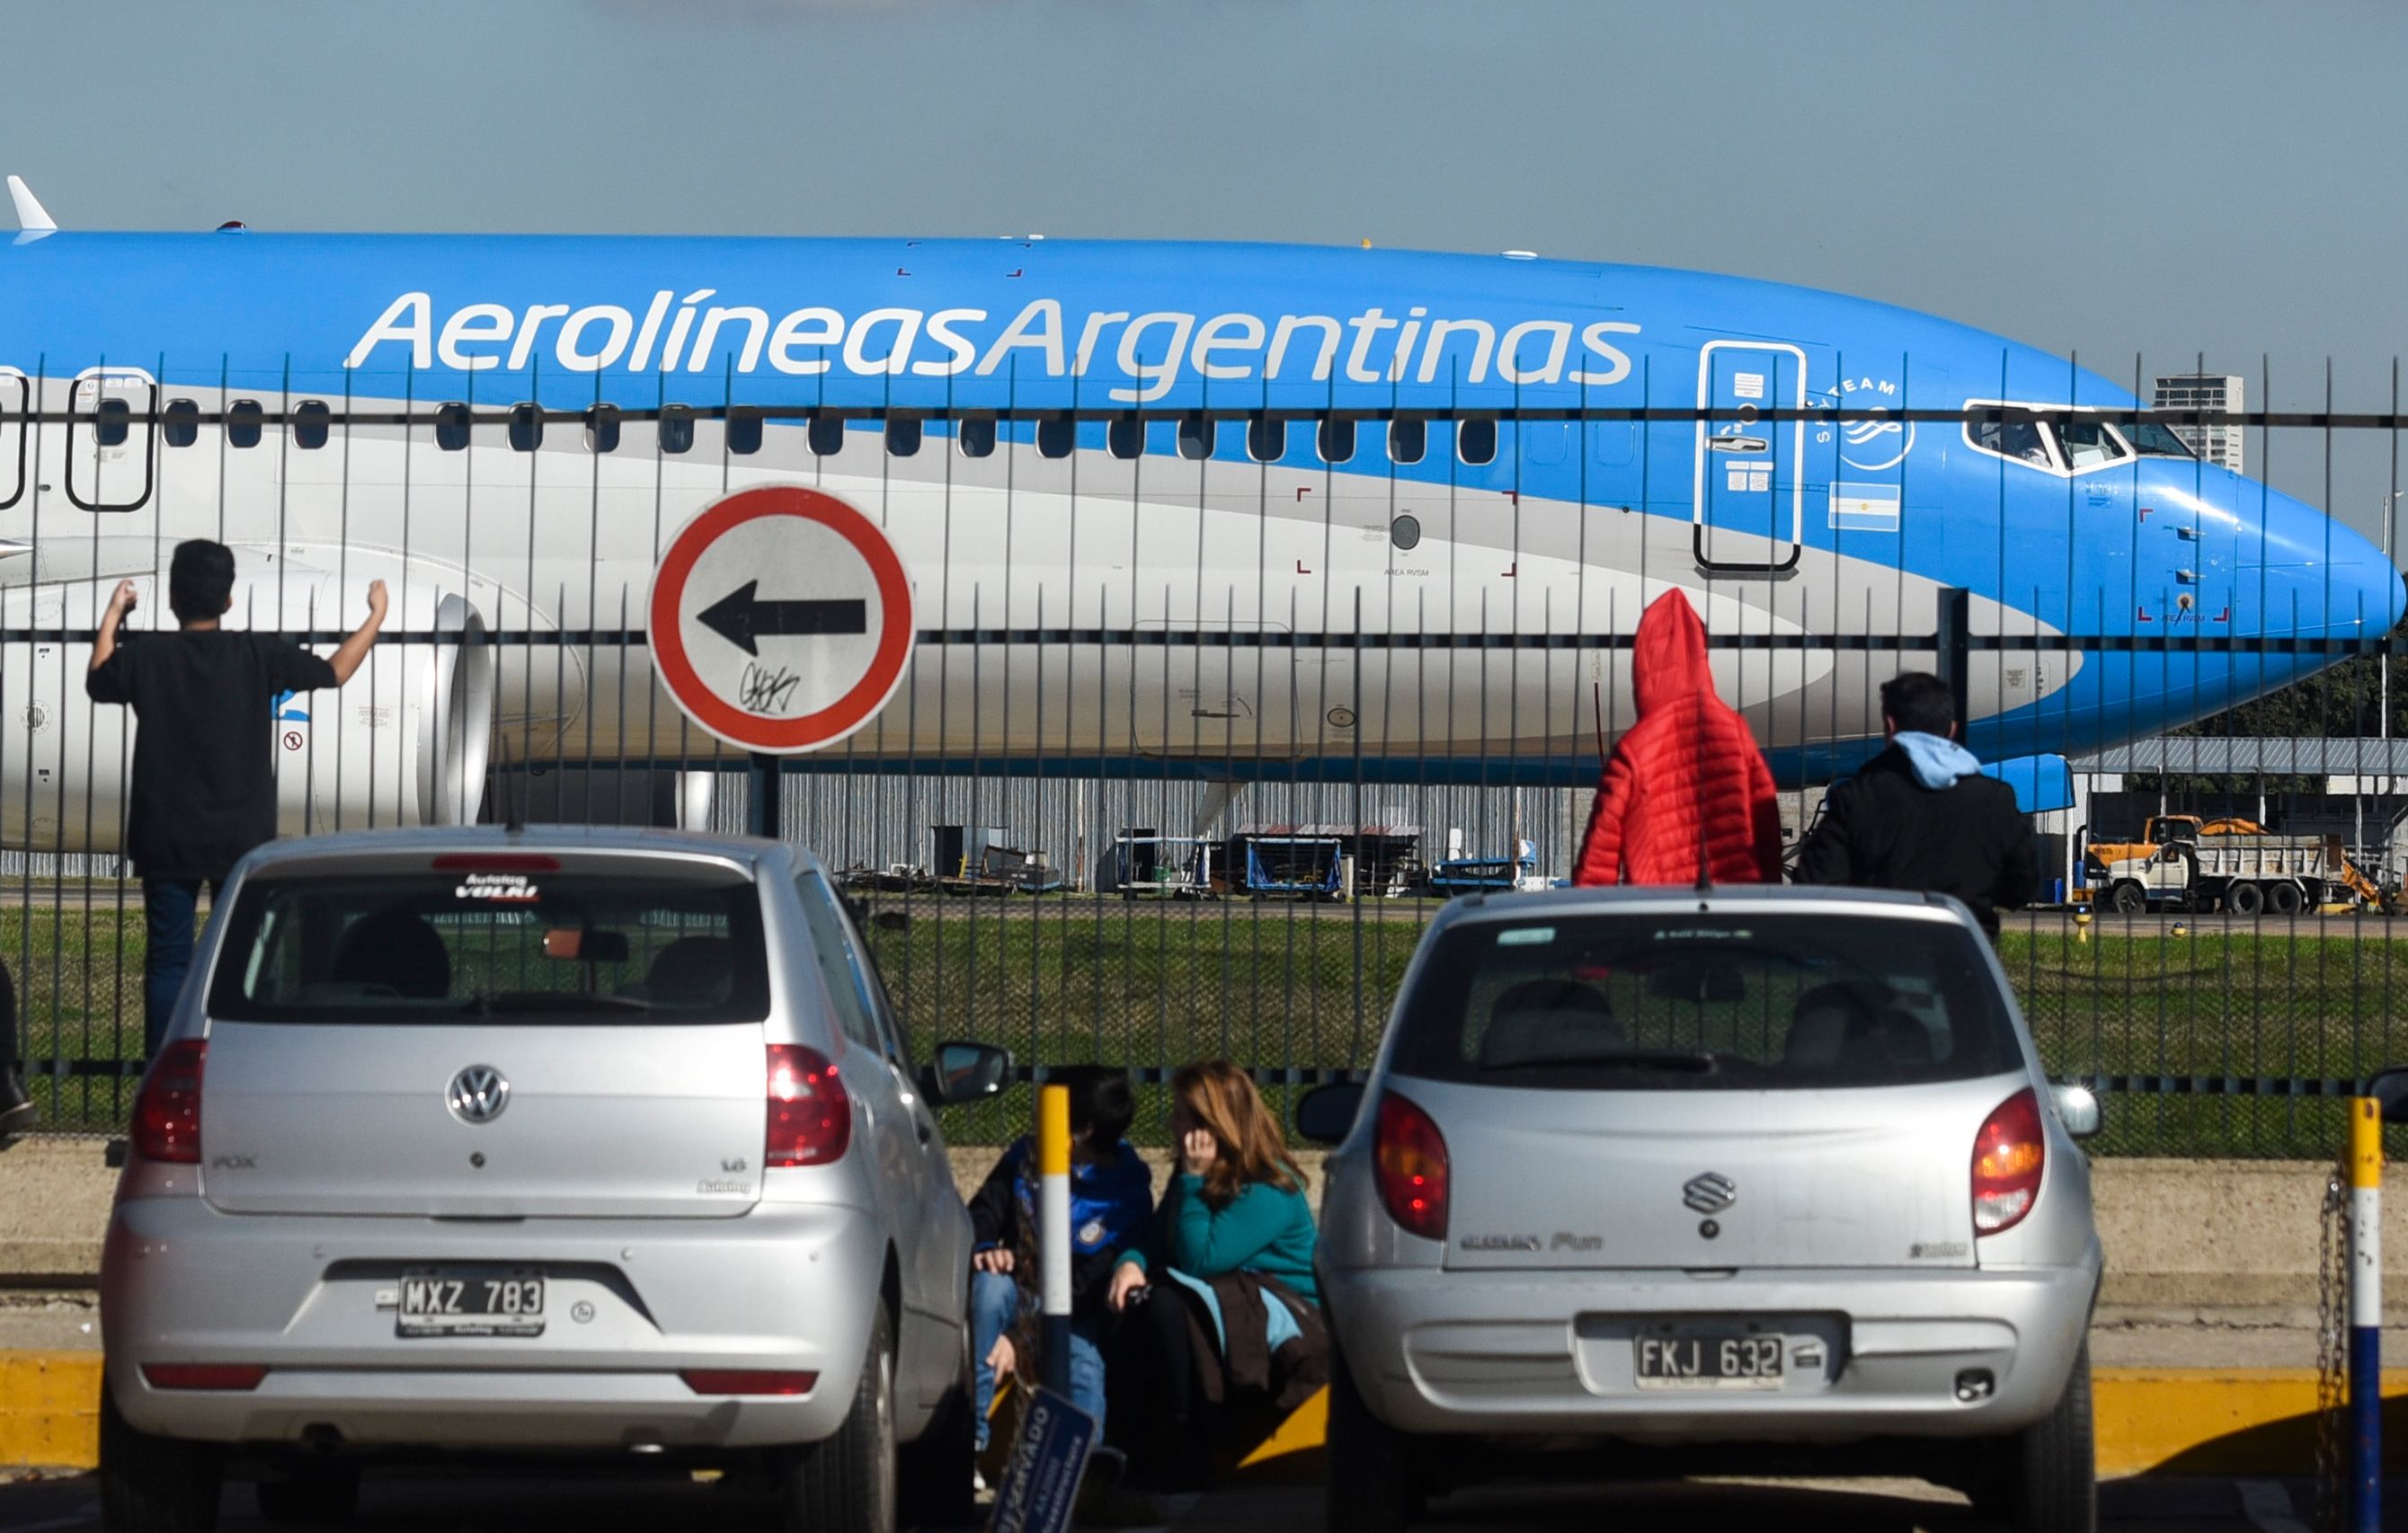 An Aerolíneas Argentinas aircraft